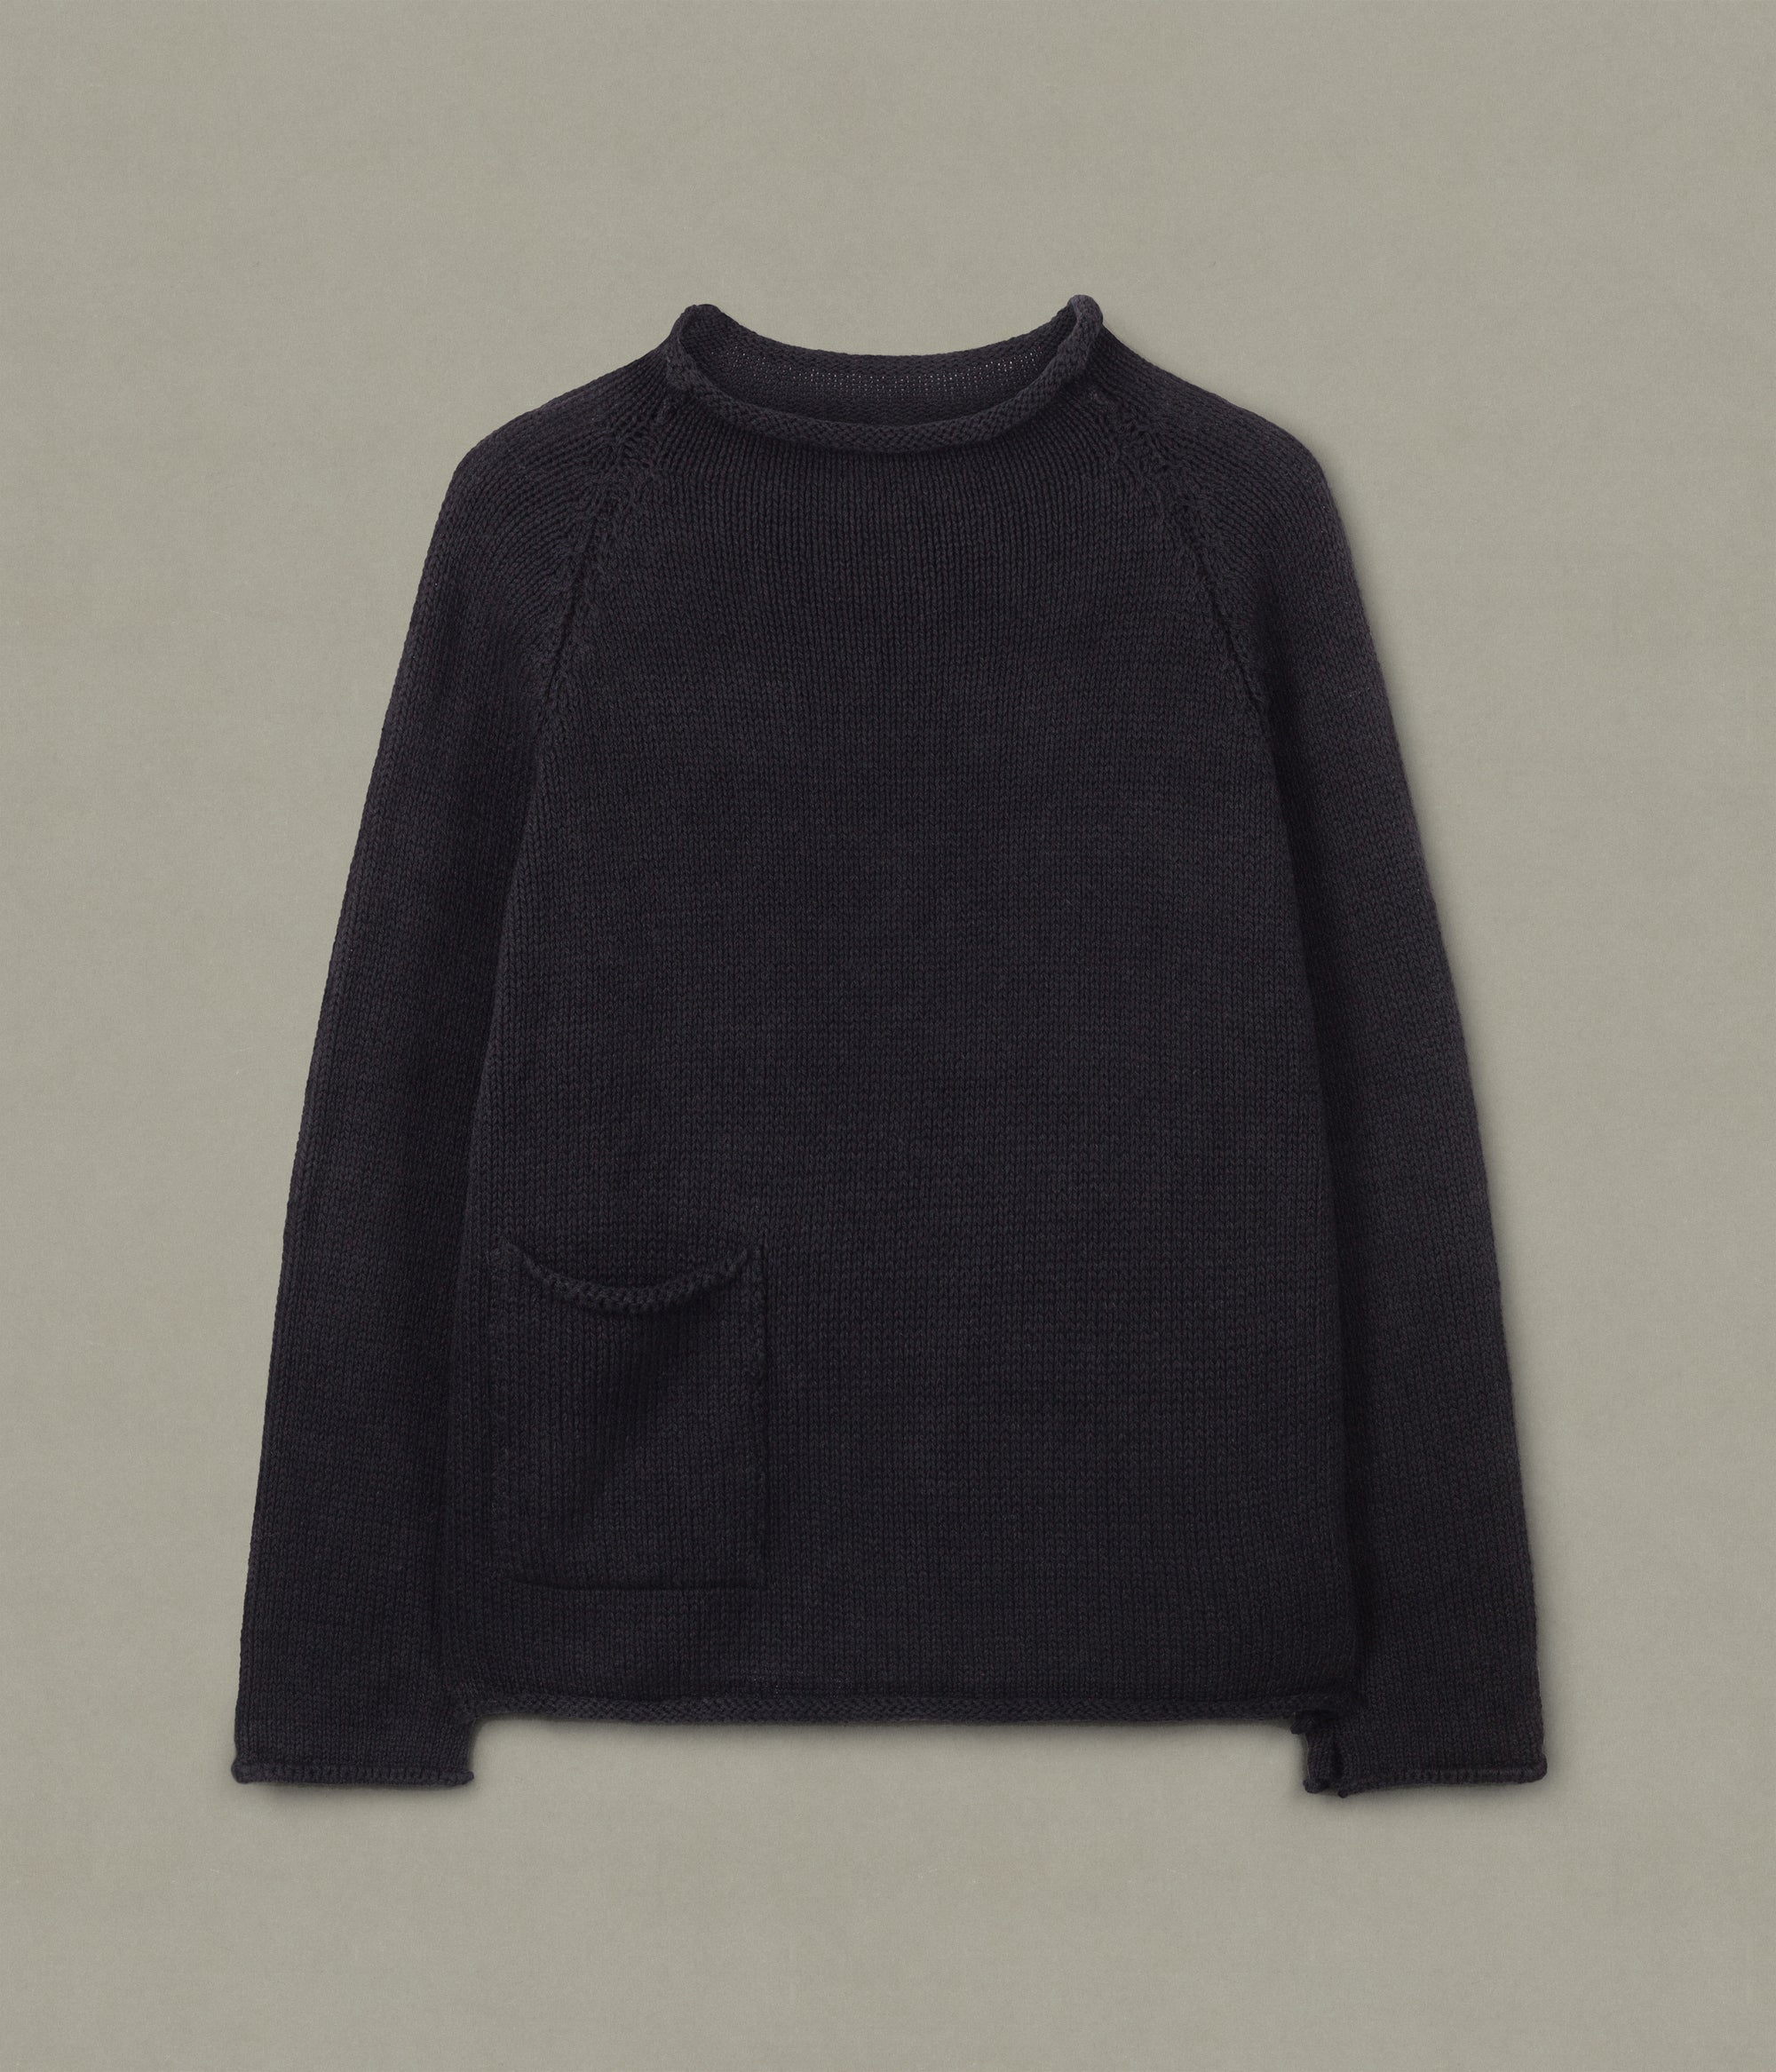 Indigo Cotton Fisherman Sweater, Black